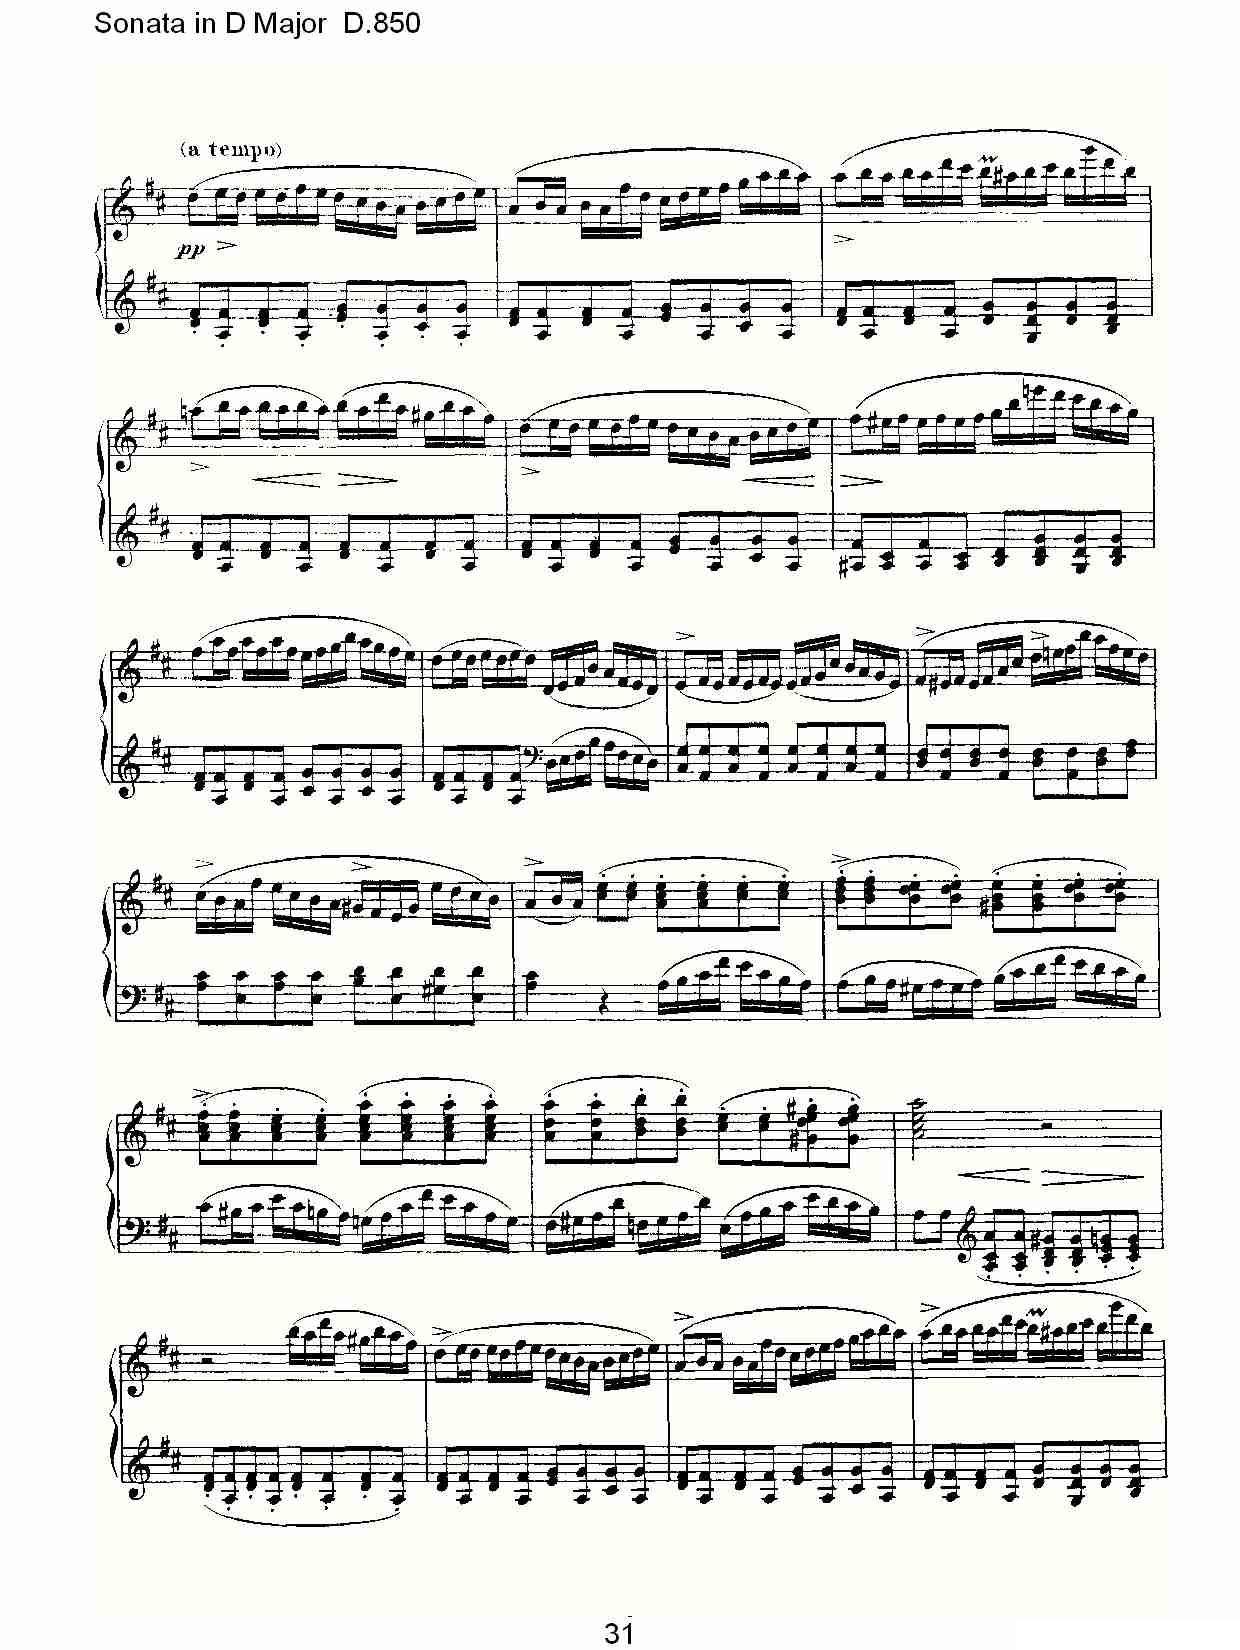 Sonata in D Major D.850（D大调奏鸣曲 D.850）钢琴曲谱（图31）